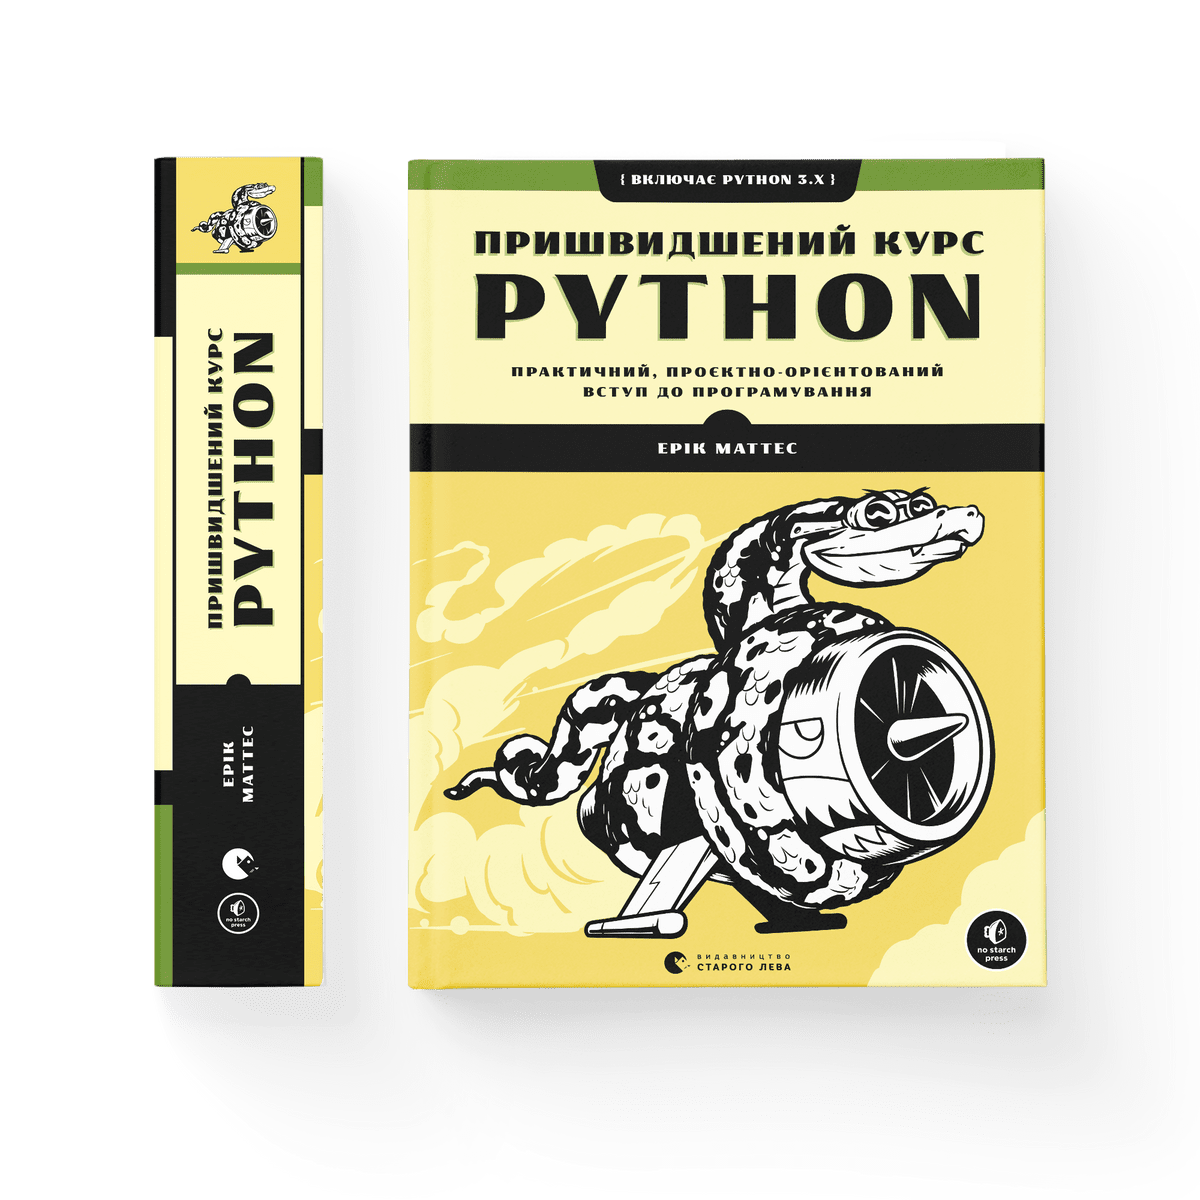 Полный курс python. Python курс. Книга полный курс Python. "Python crash course" by Eric Matthes.